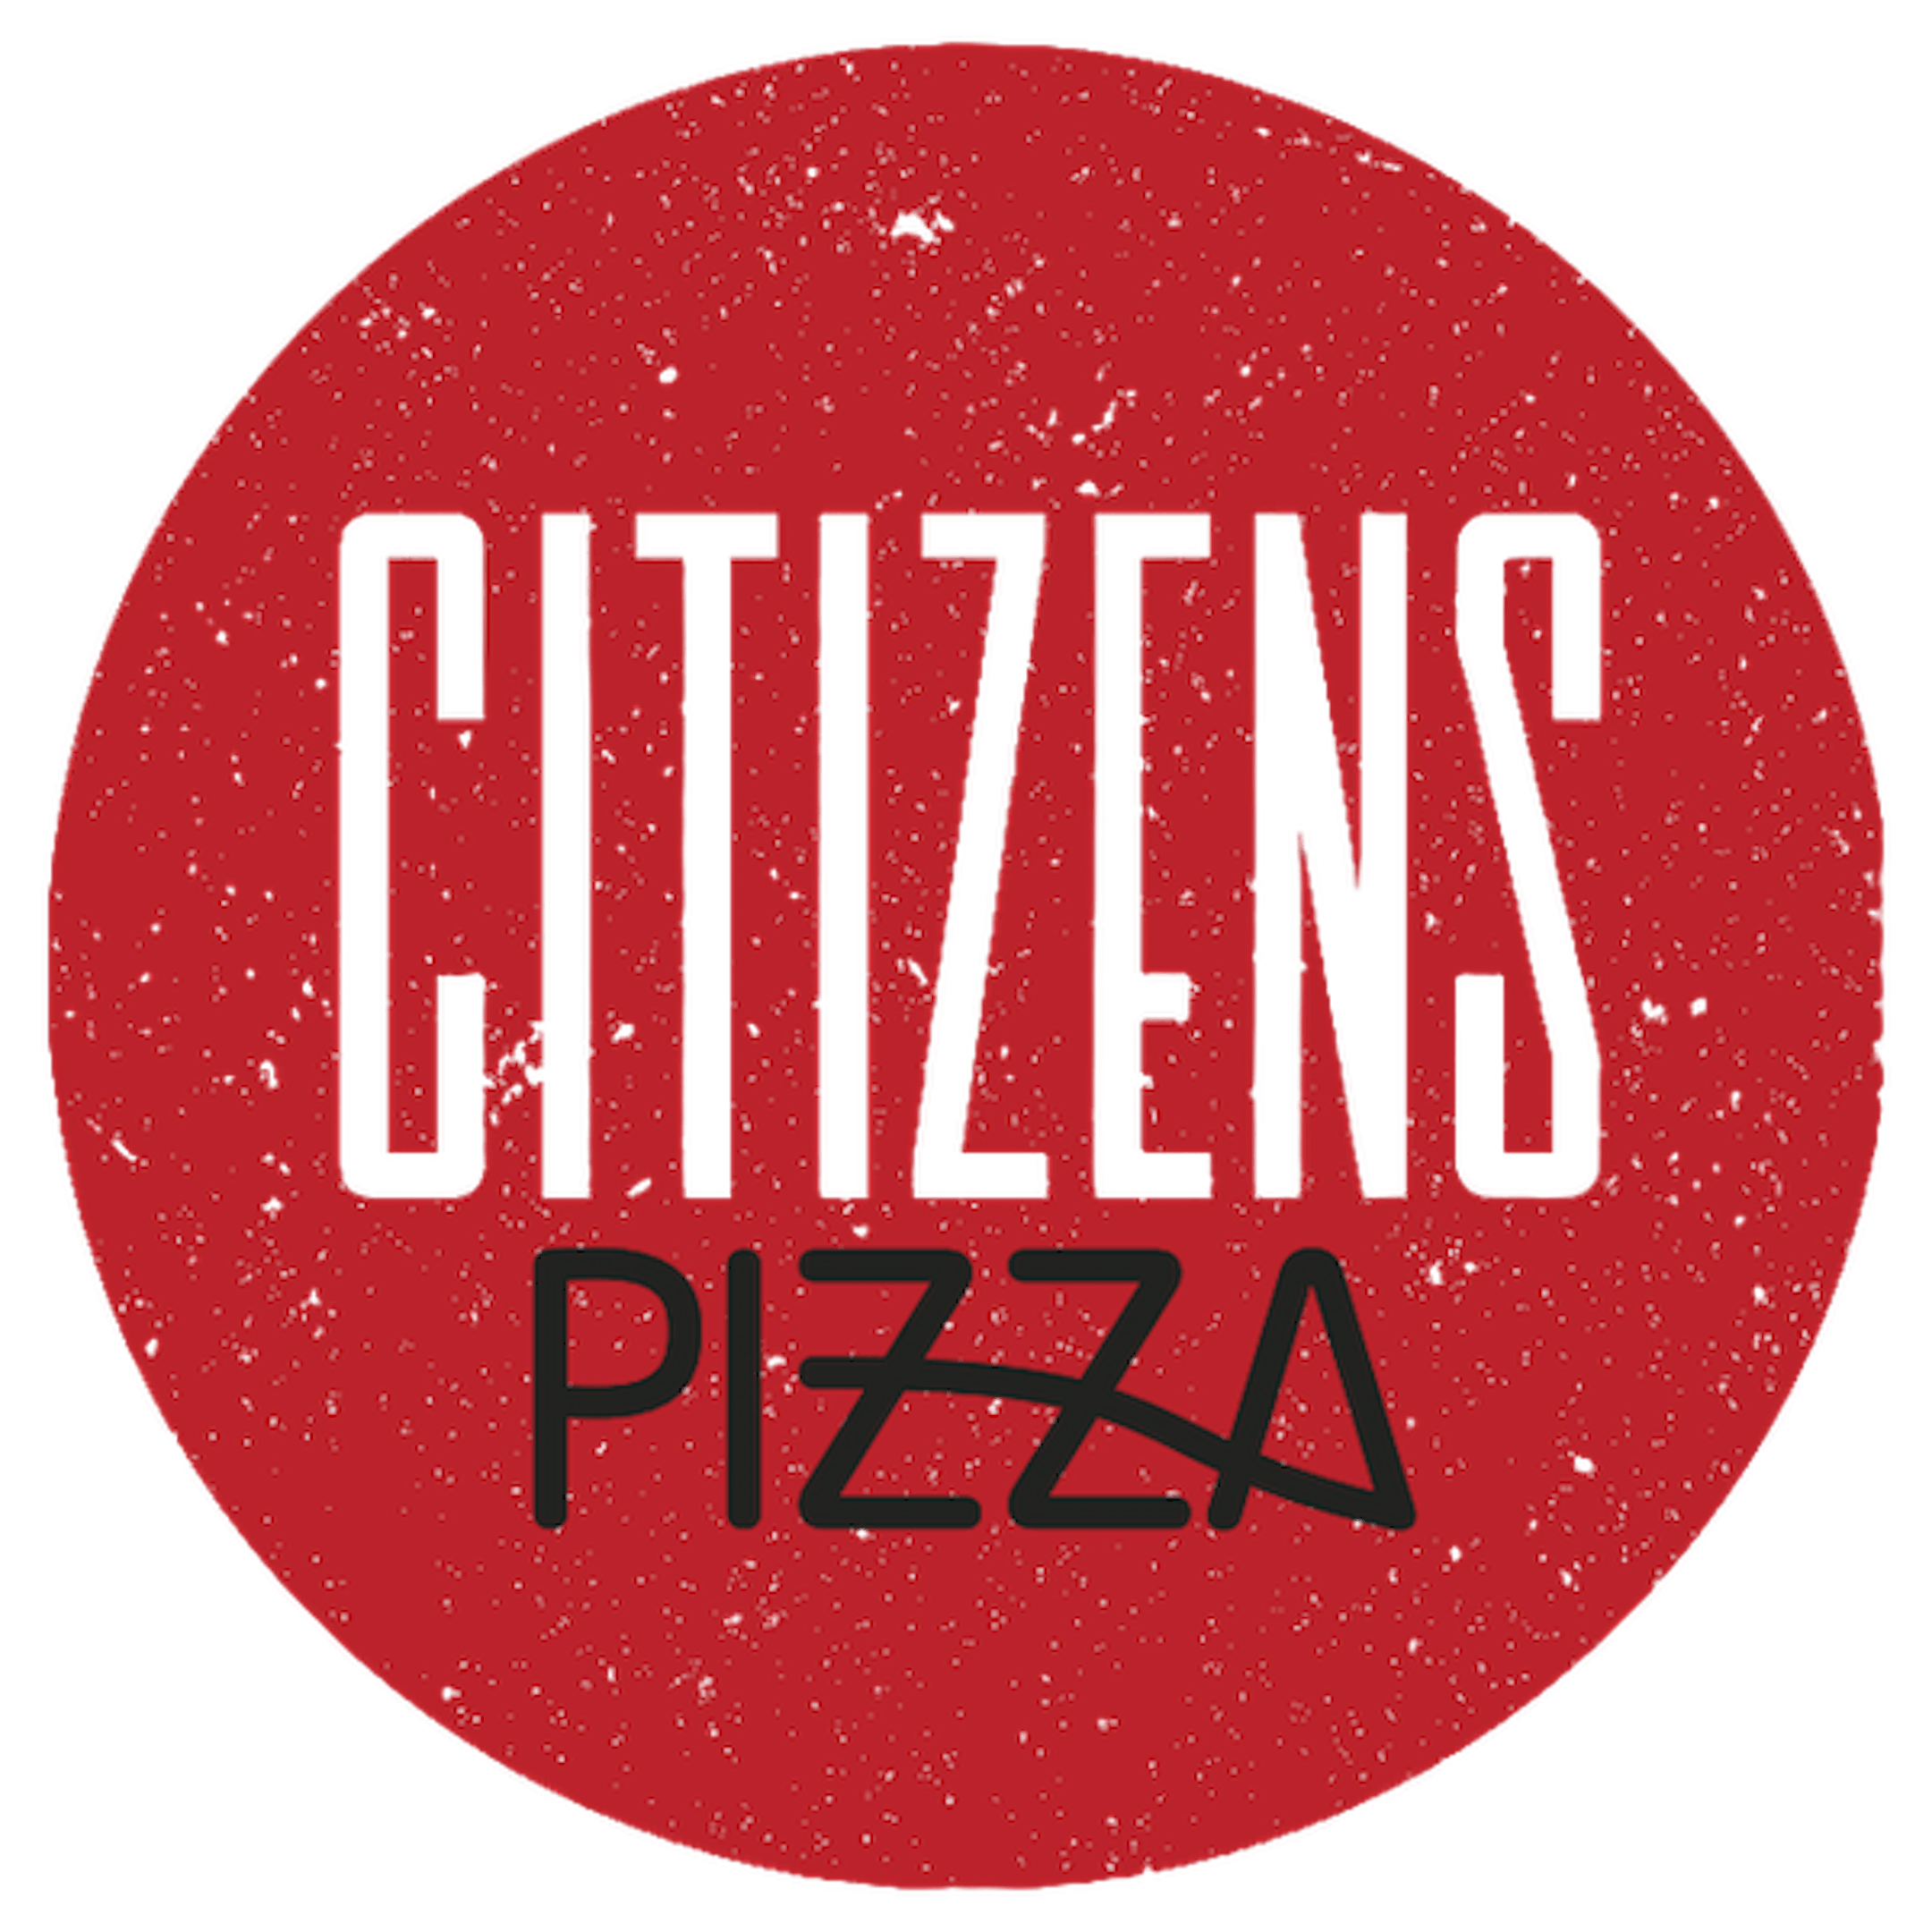 Citizens Pizza